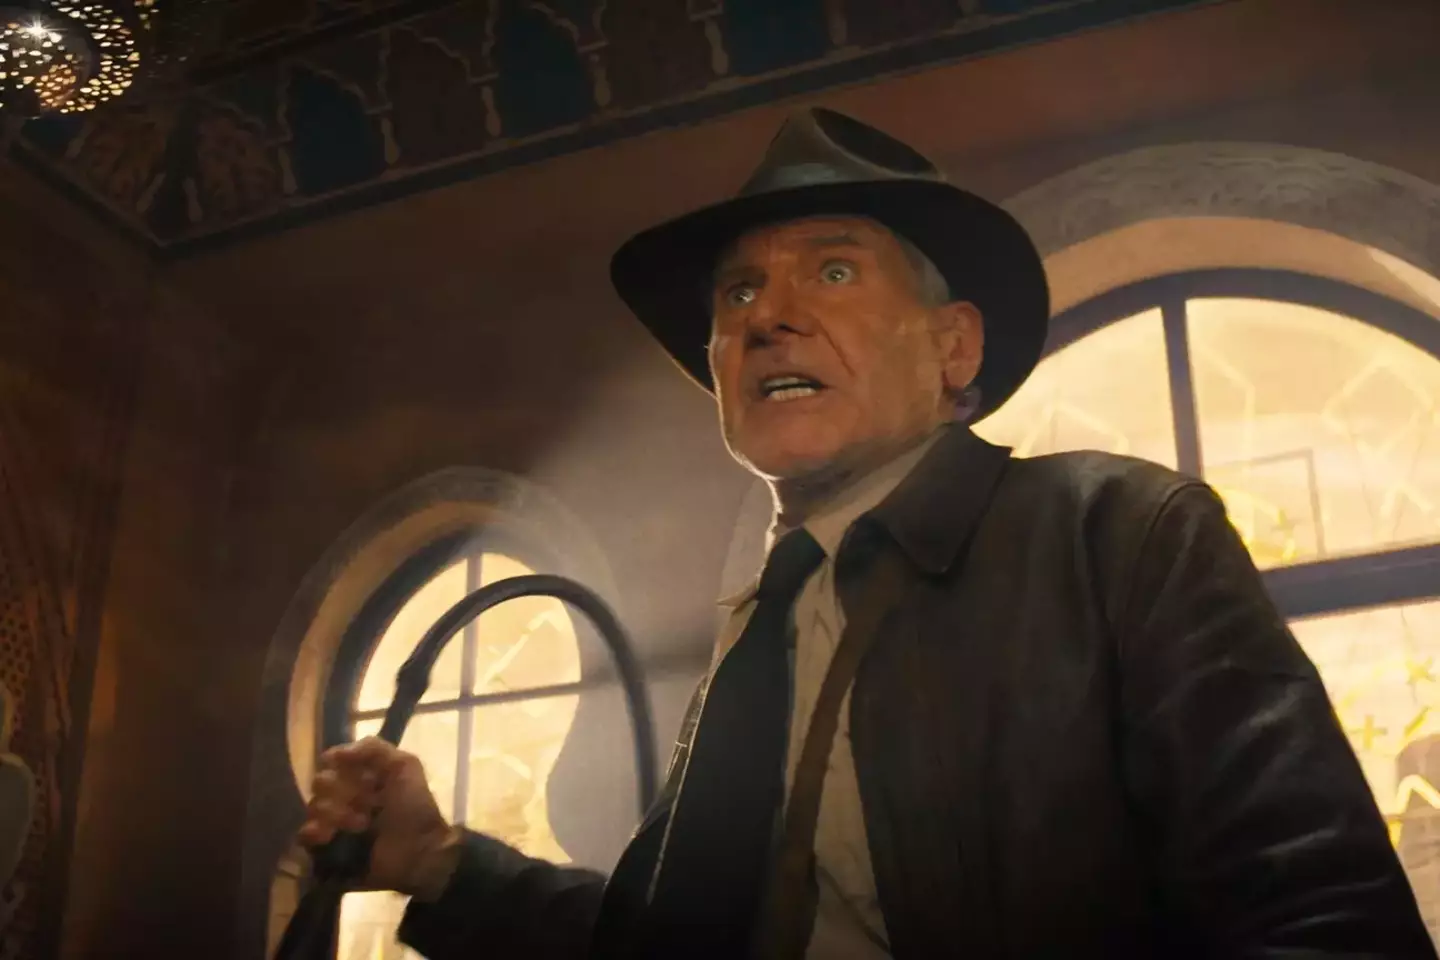 Indiana Jones and the Dial of Destiny is now in cinemas worldwide.